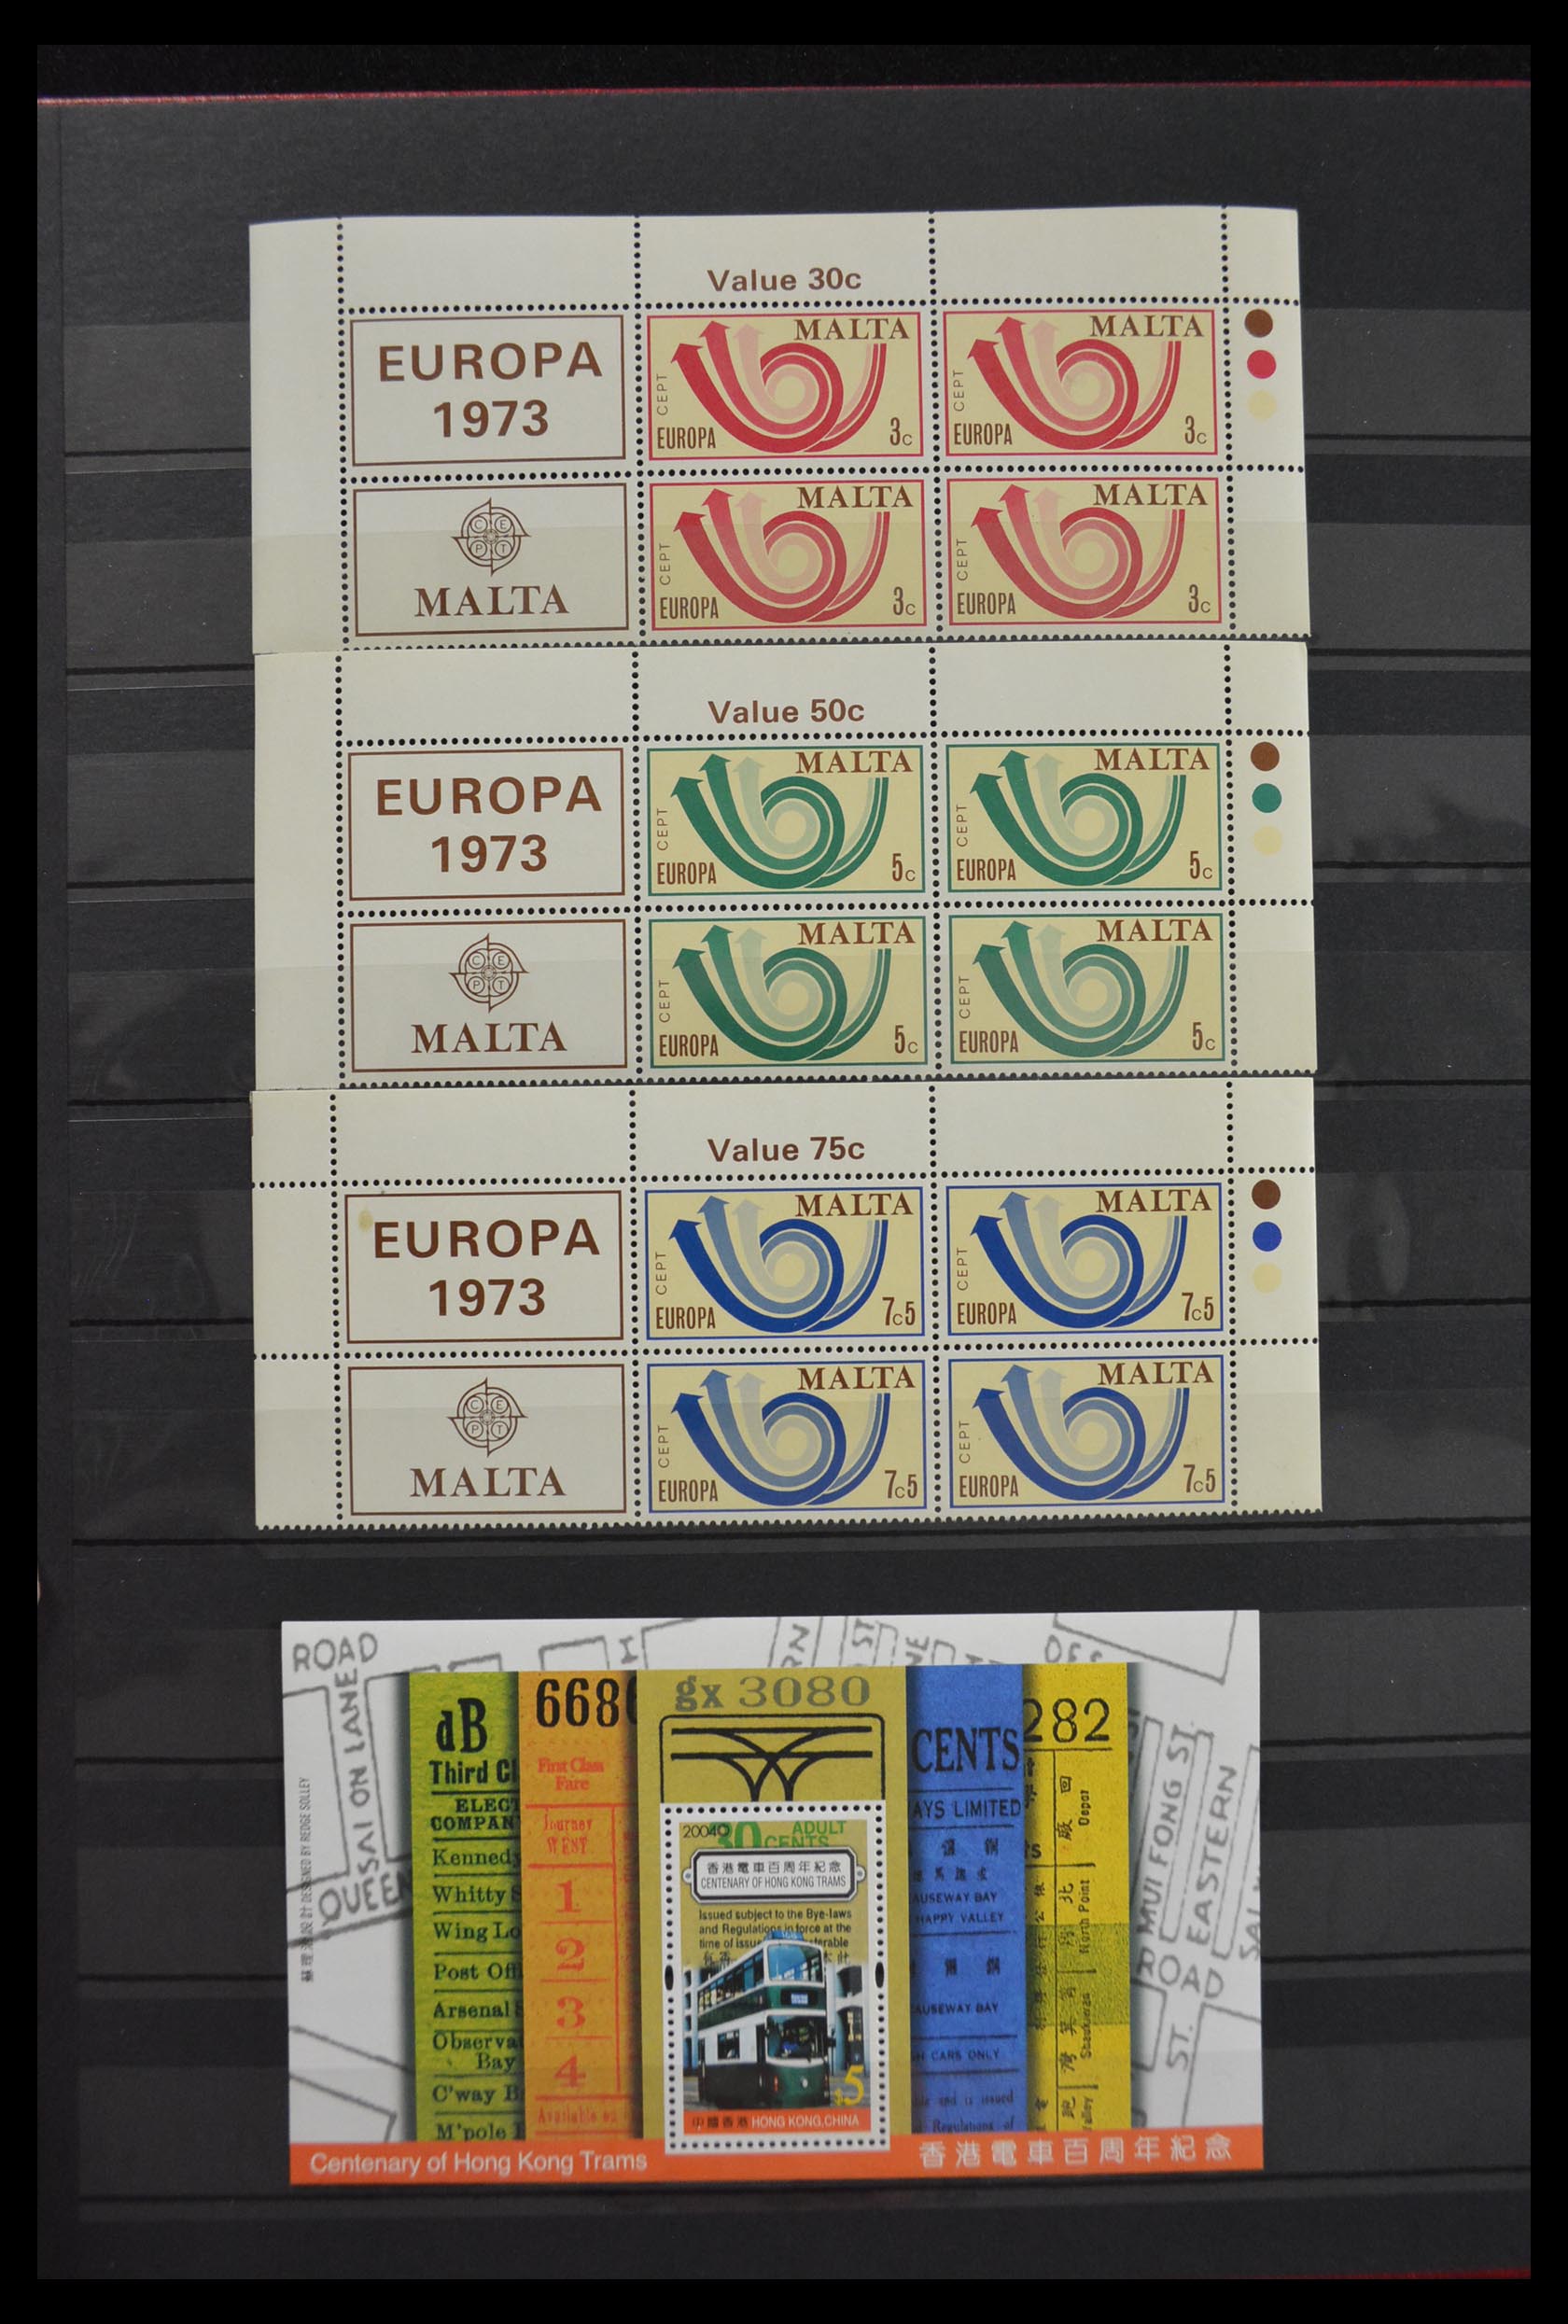 29940 590 - 29940 Engeland en Koloniën 1920-1970.